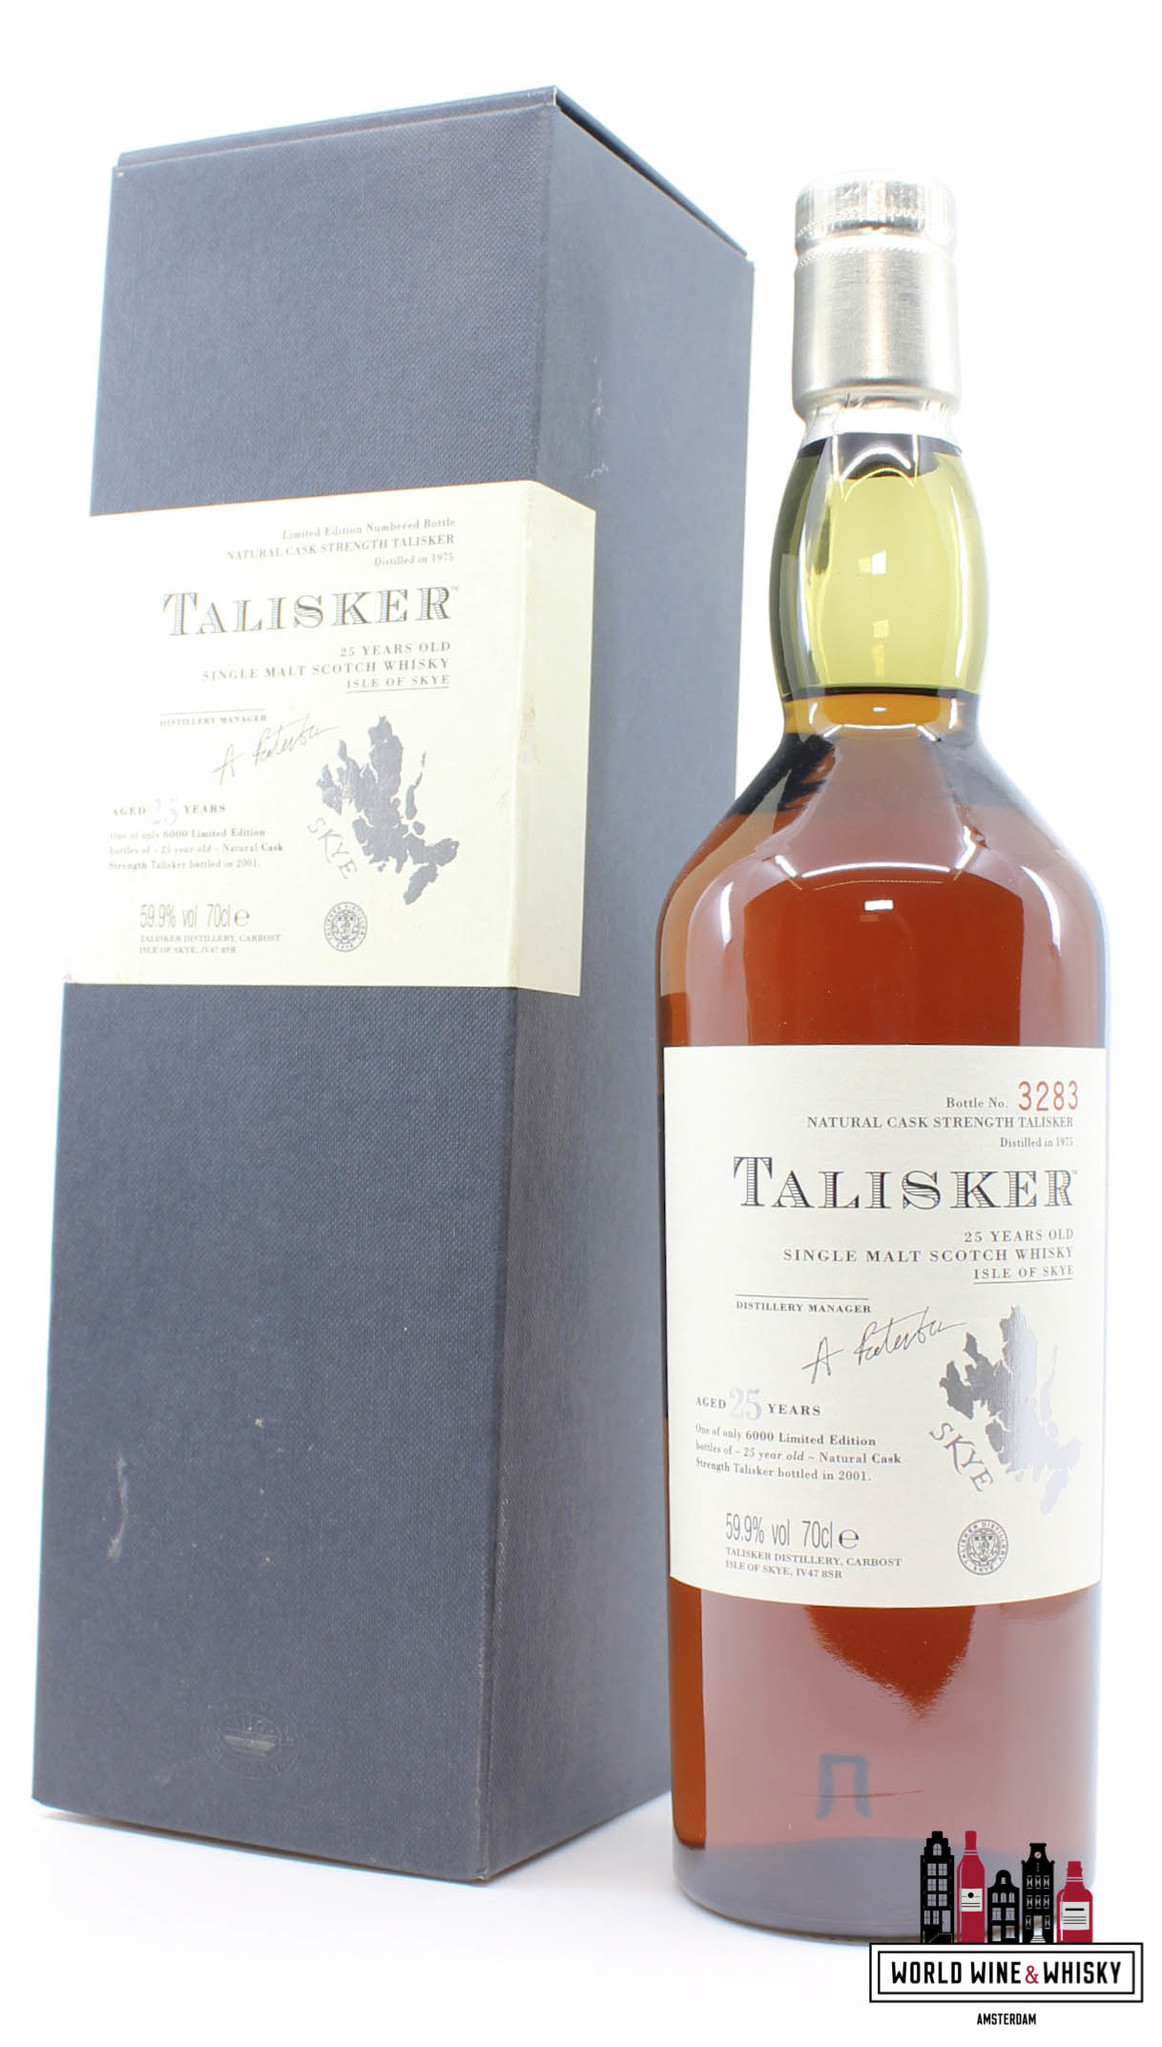 Talisker Talisker 25 Years Old 1975 2001 - Natural Cask Strength 59.9% (1 of 6000)